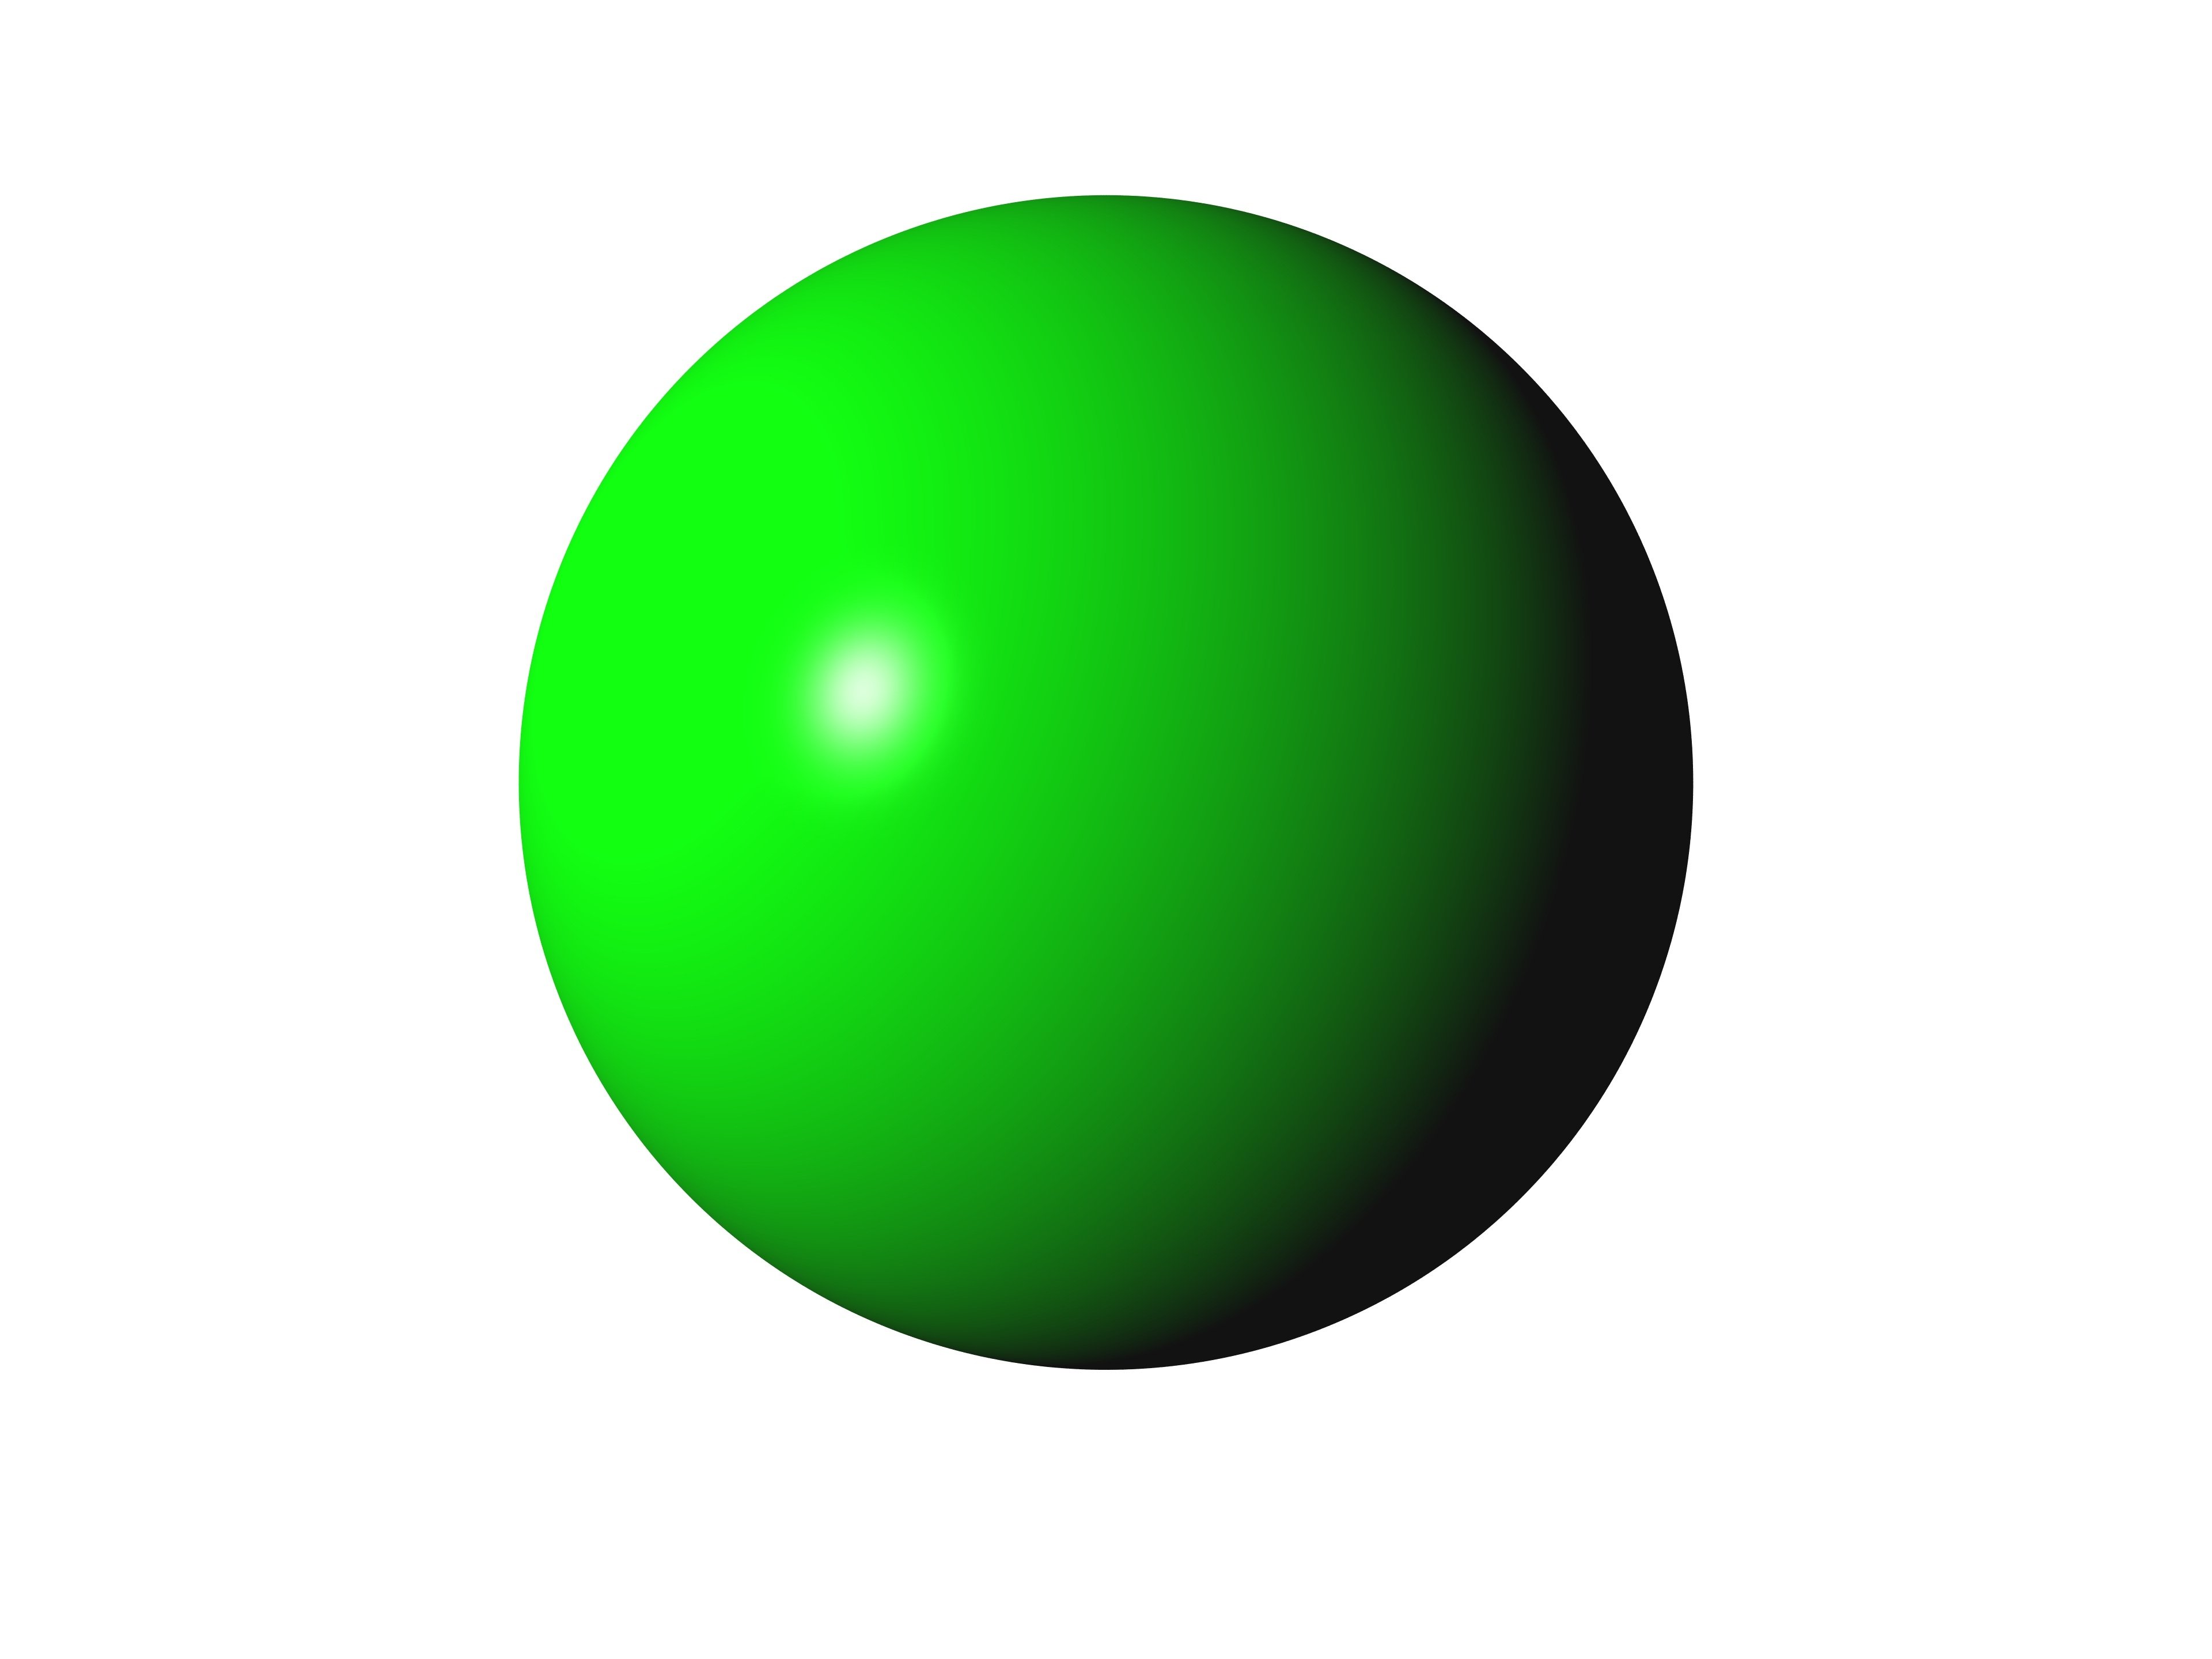 Включи куля. Шар Геометрическая фигура. Шар объемная фигура. Шар зеленый. Объемный круг.